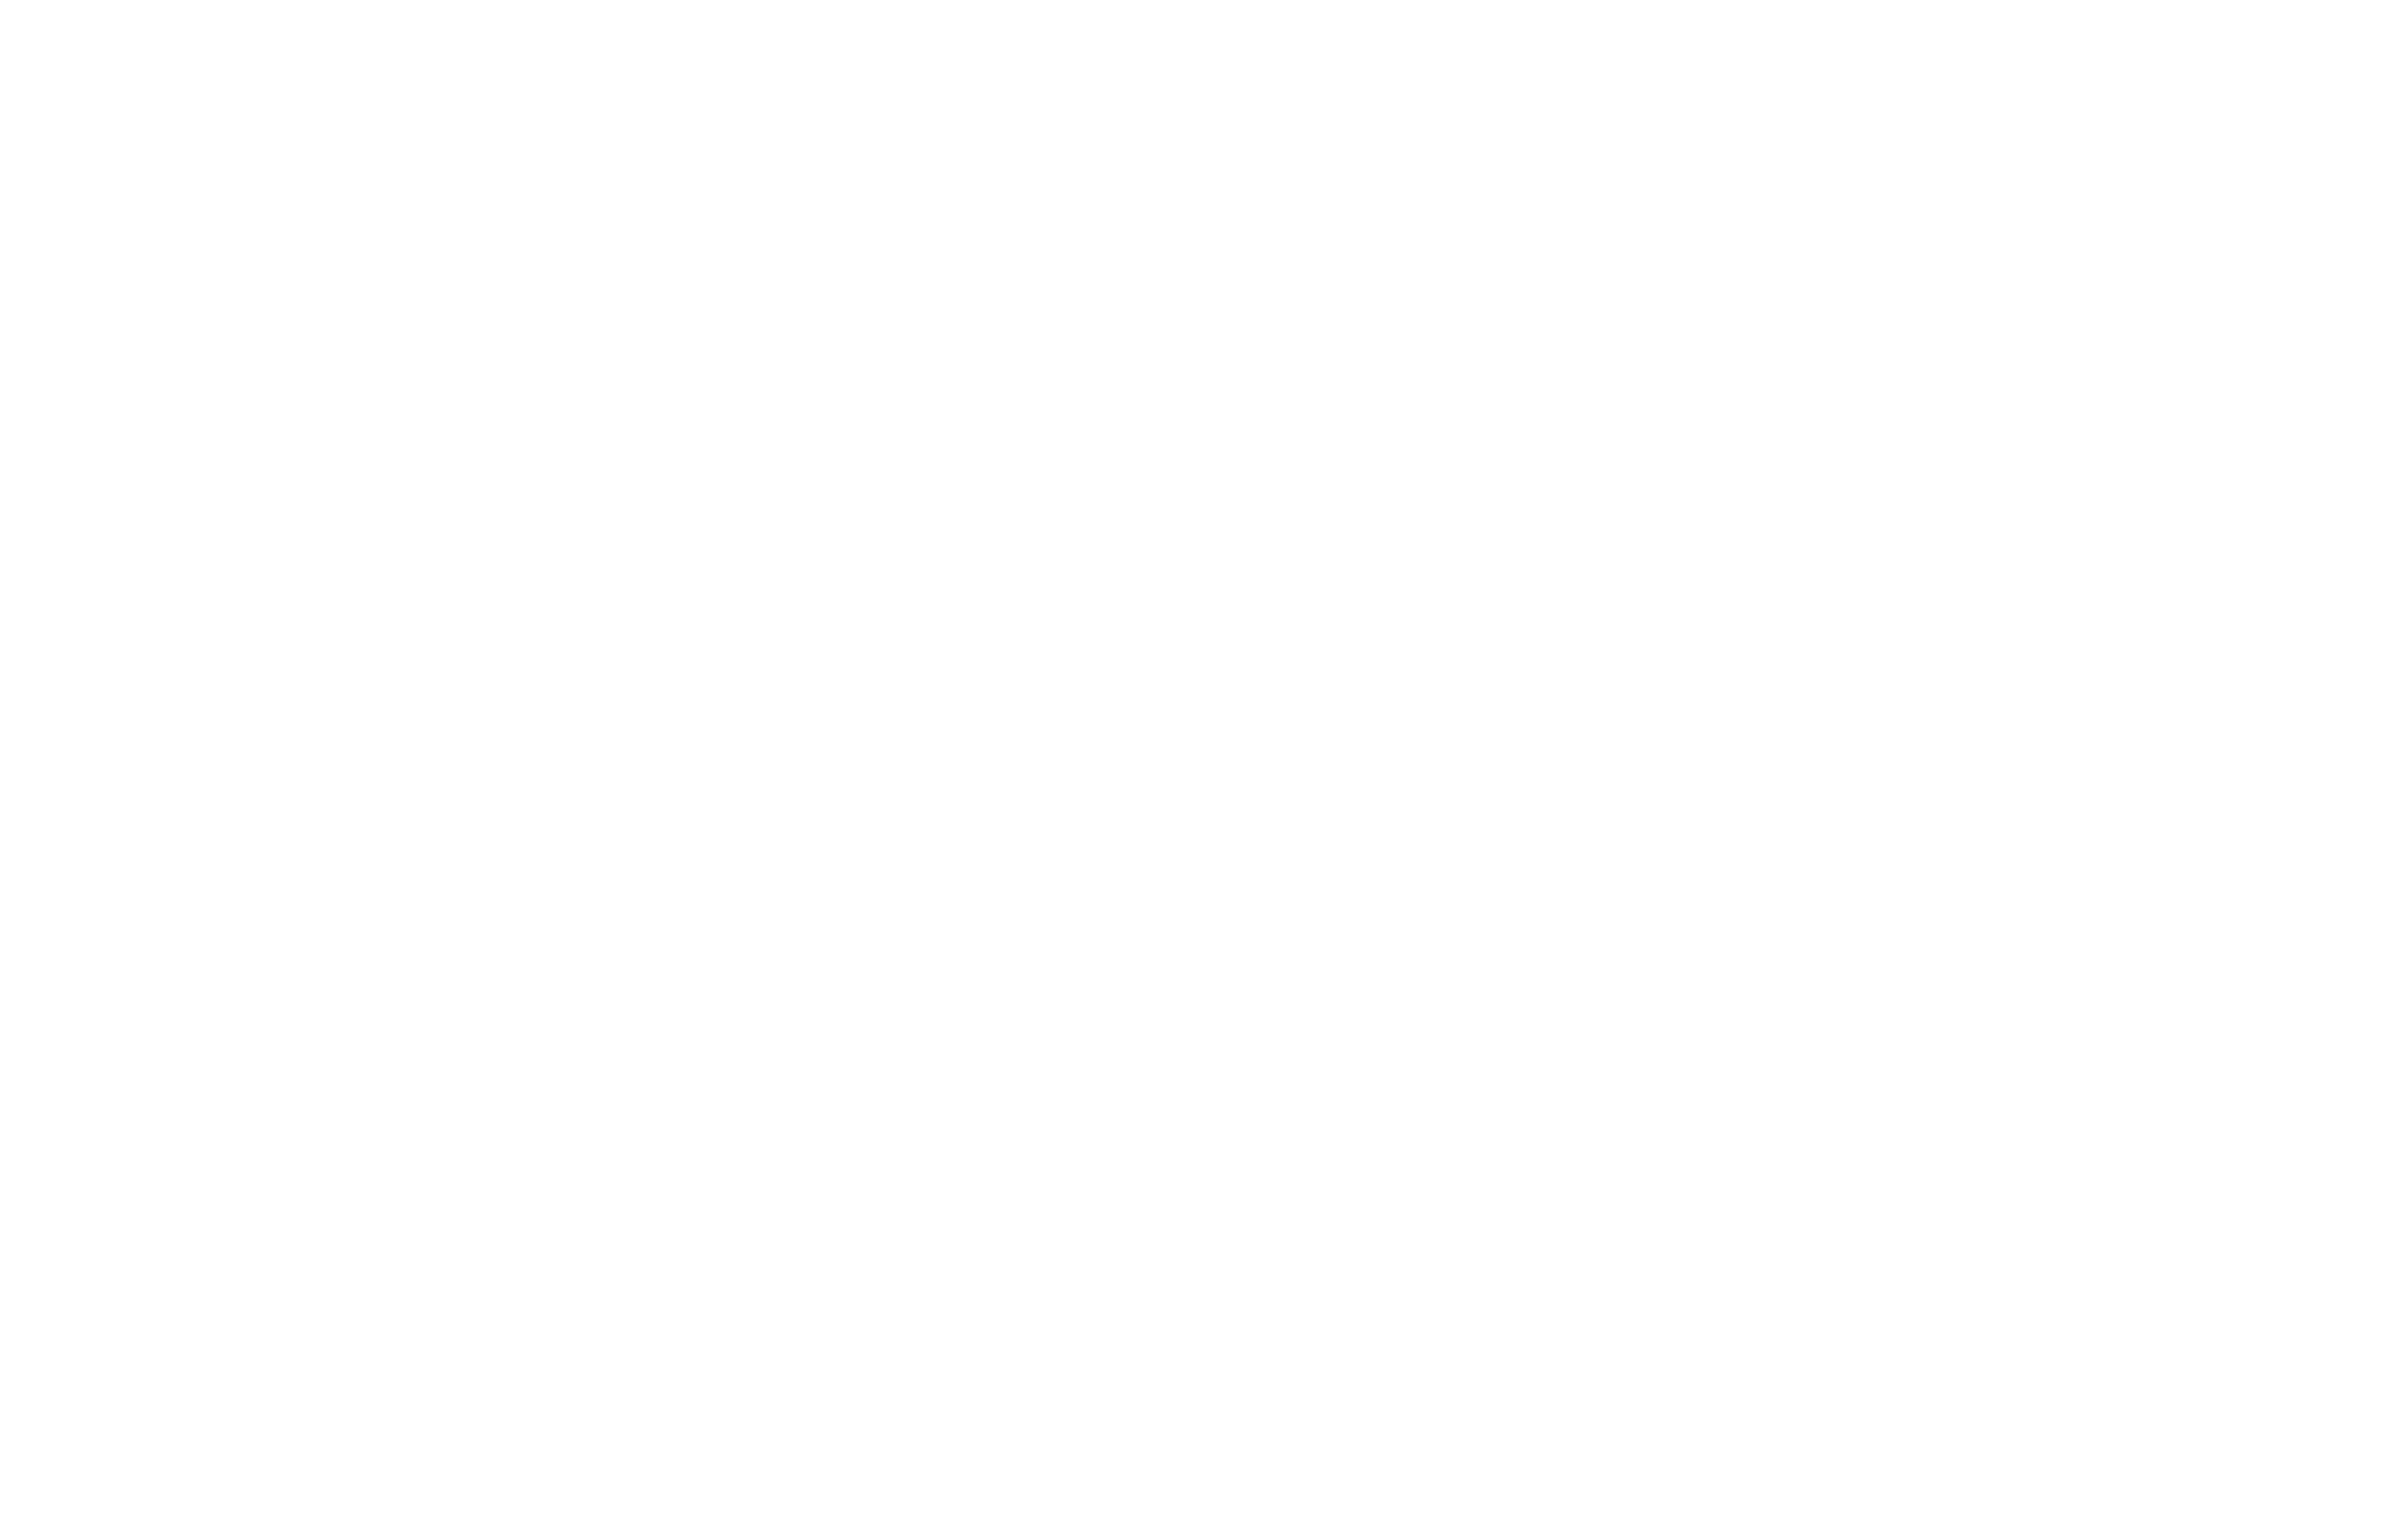 tidal logo white